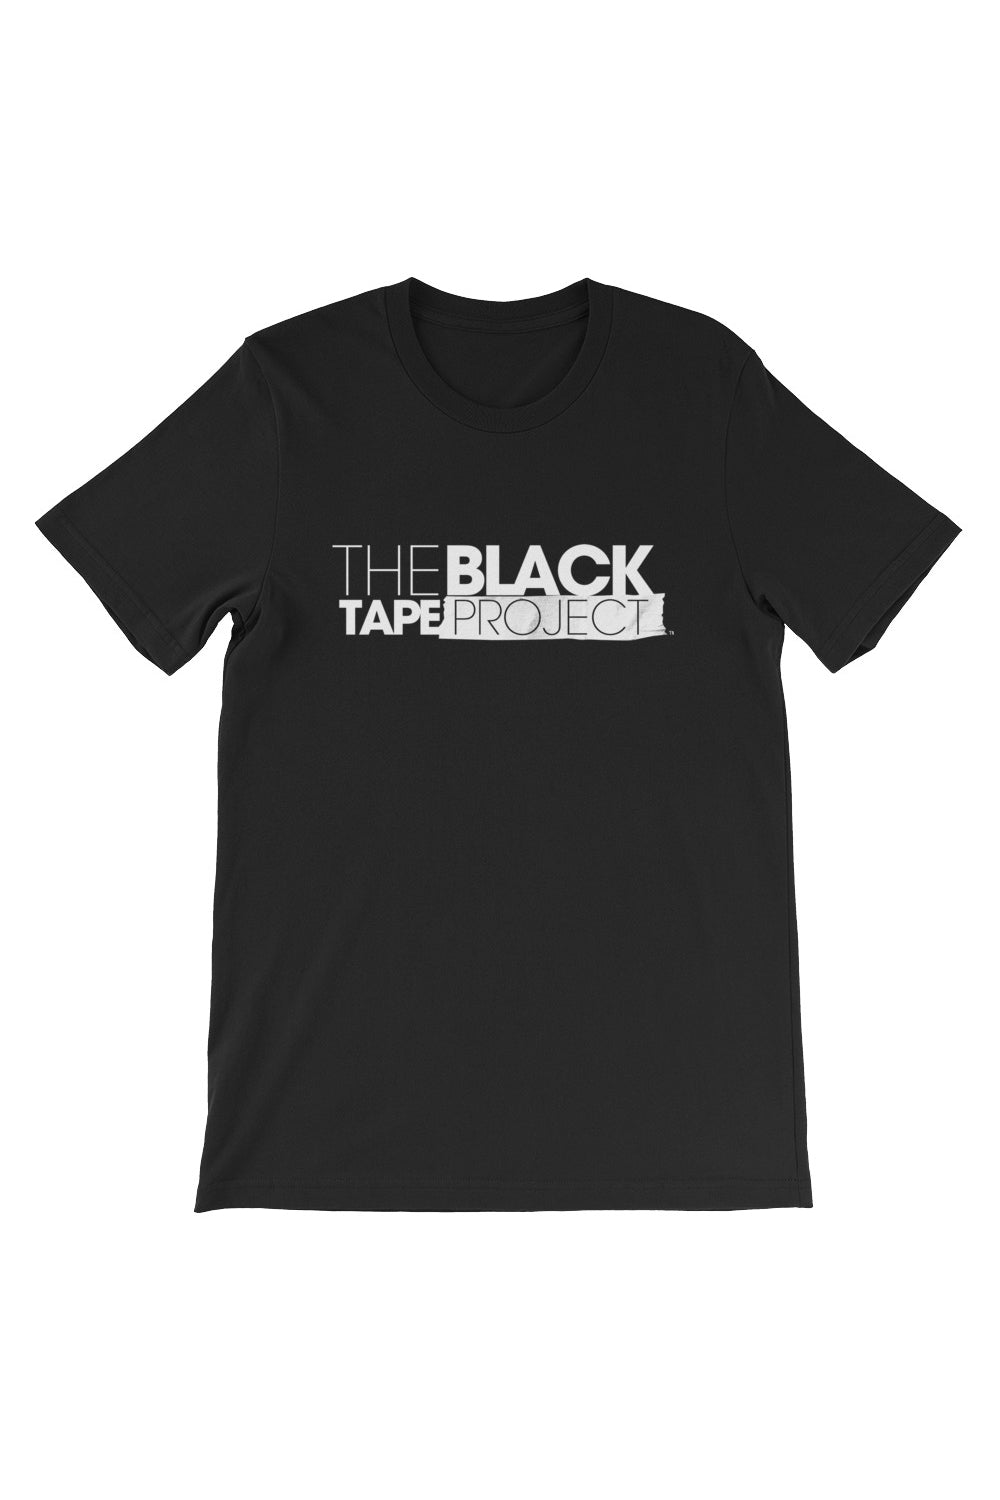 Men's Black Tape Project T-Shirt - Black Tape Project